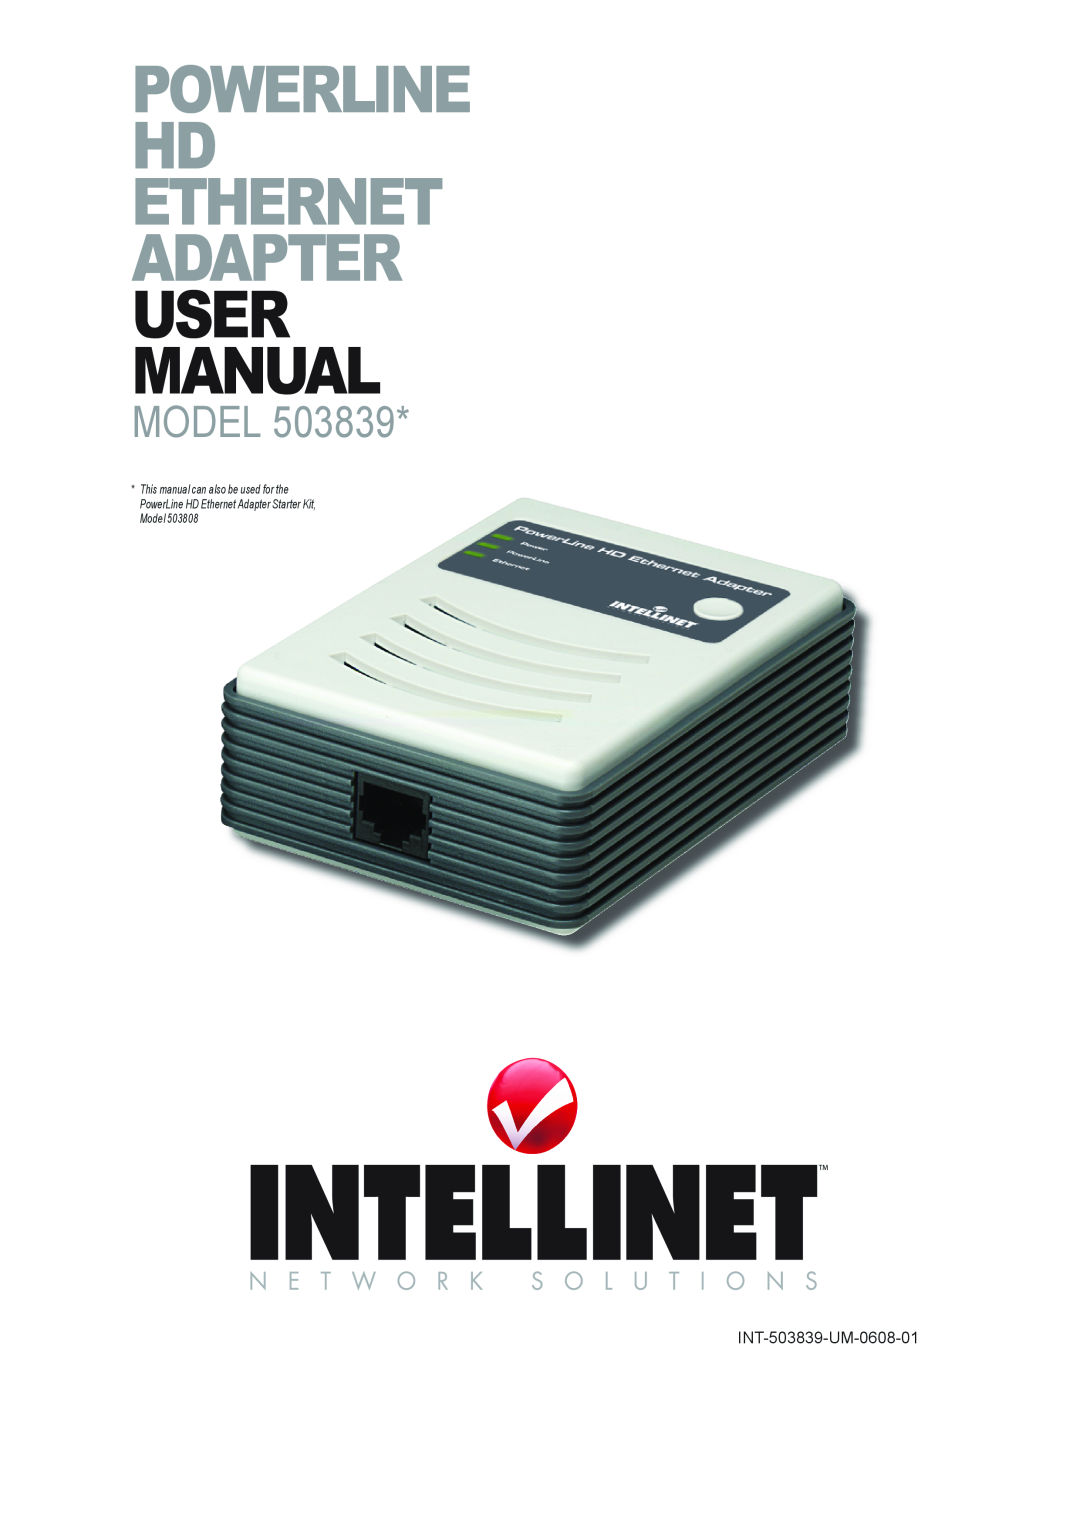 Intellinet Network Solutions user manual PowerLine HD Ethernet Adapter user manual, Model, INT-503839-UM-0608-01 